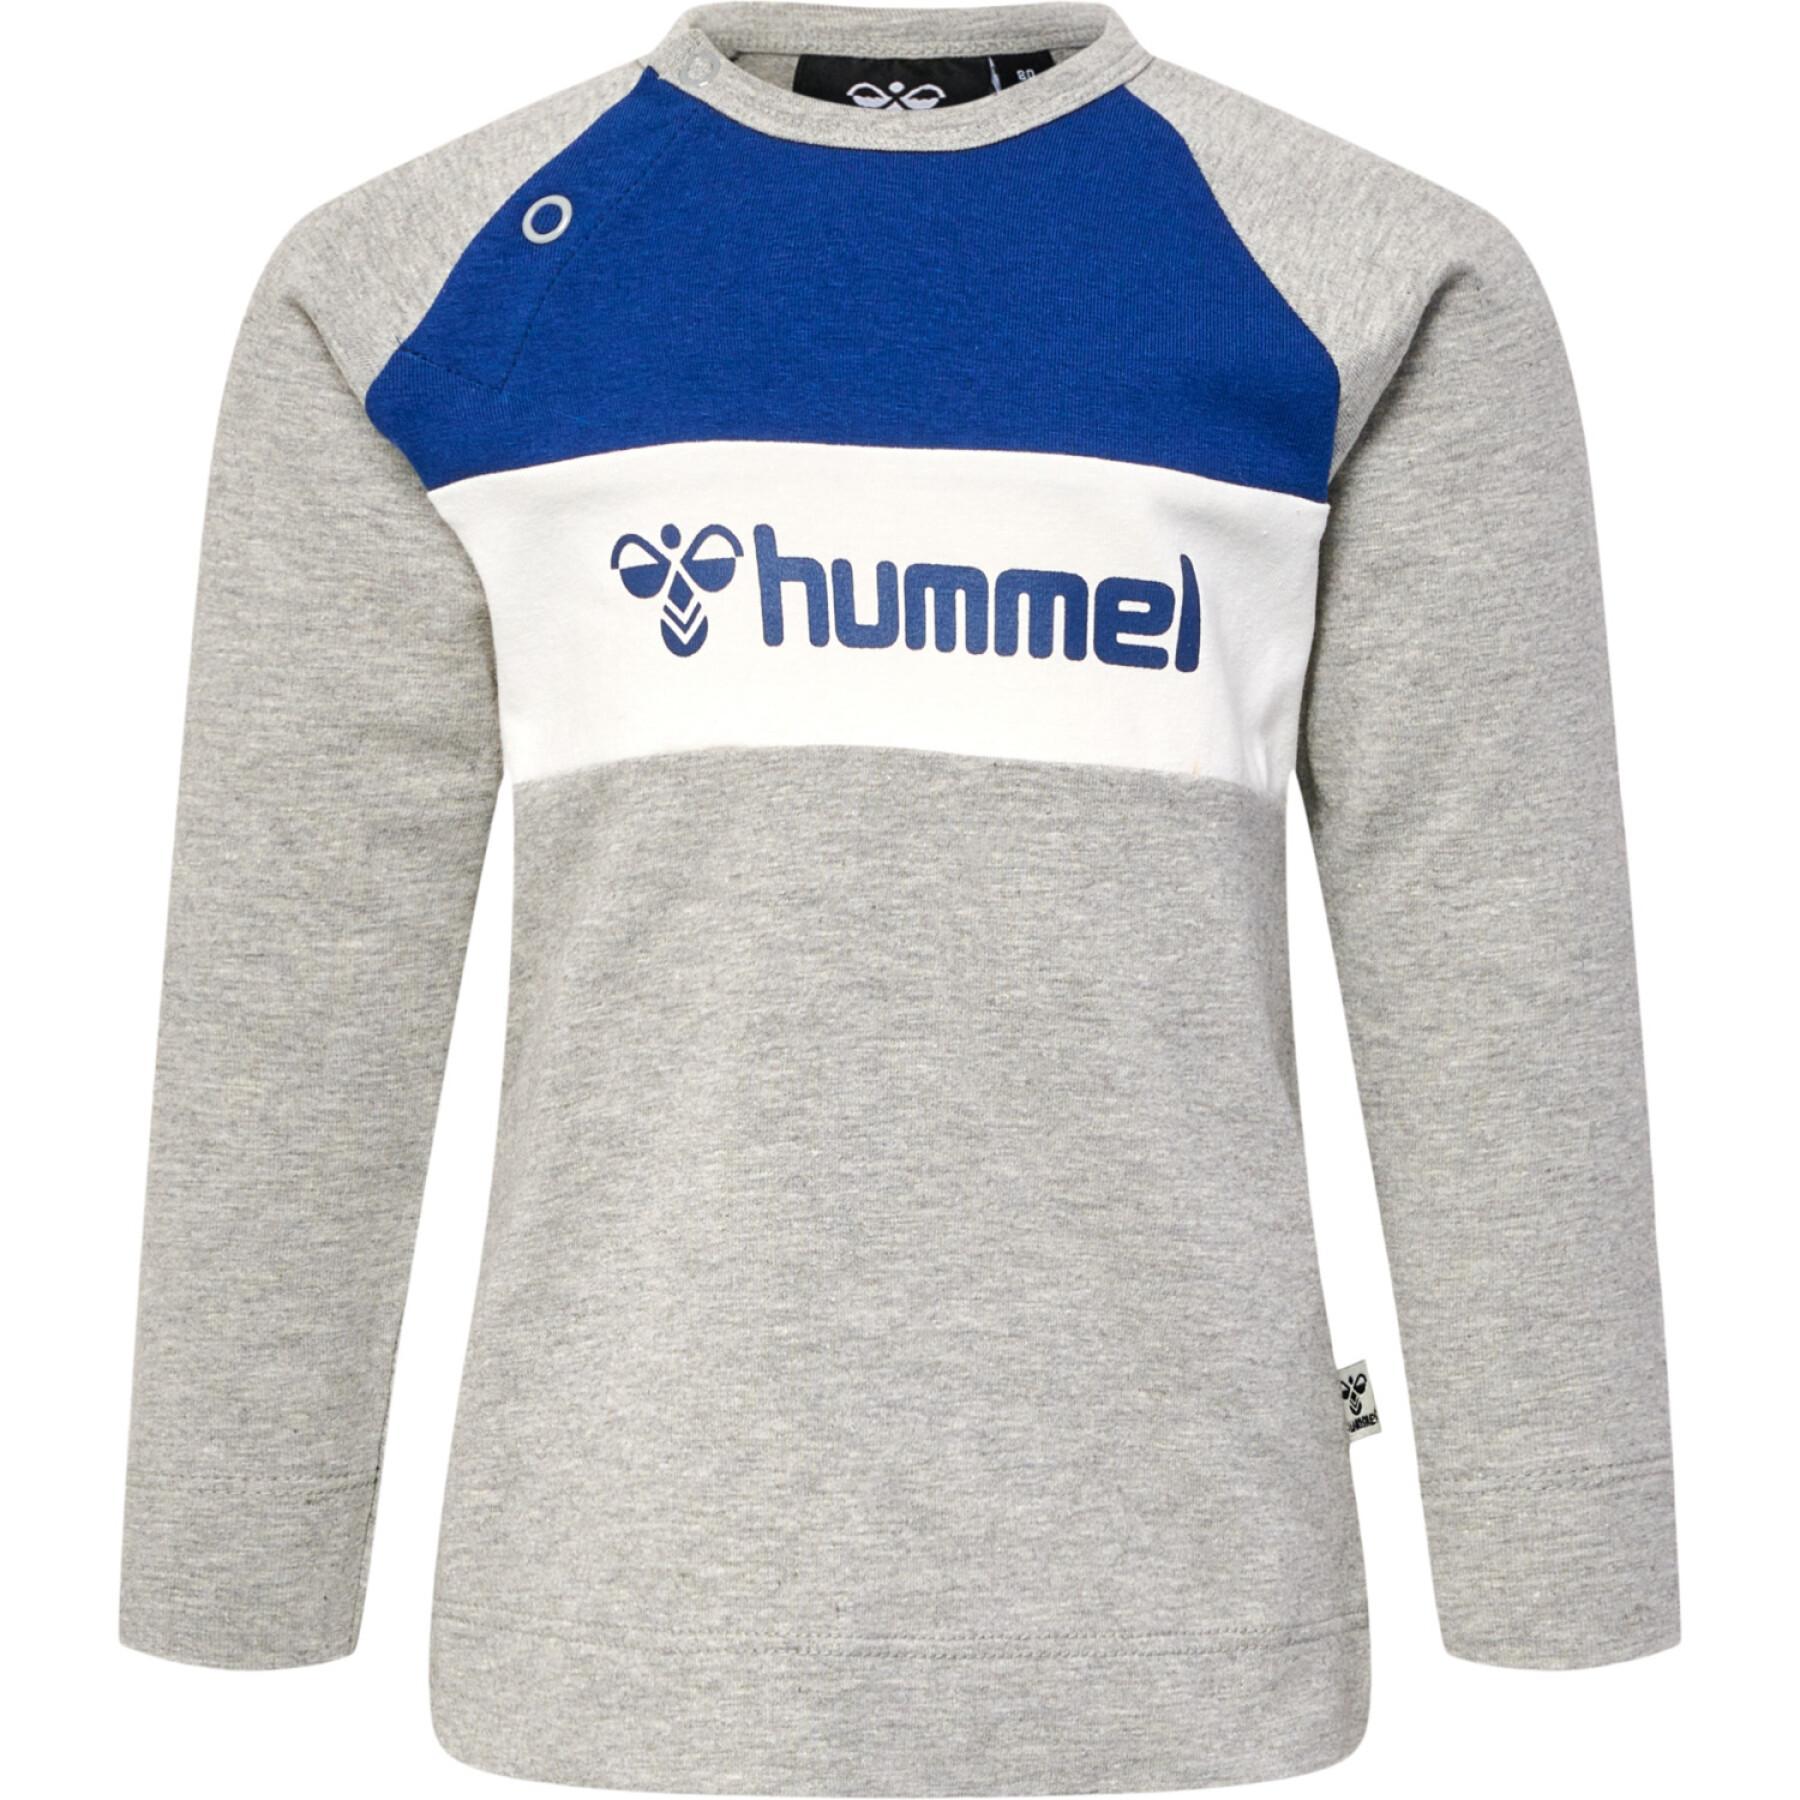 T-shirt manches longues enfant Hummel hmlMurphy